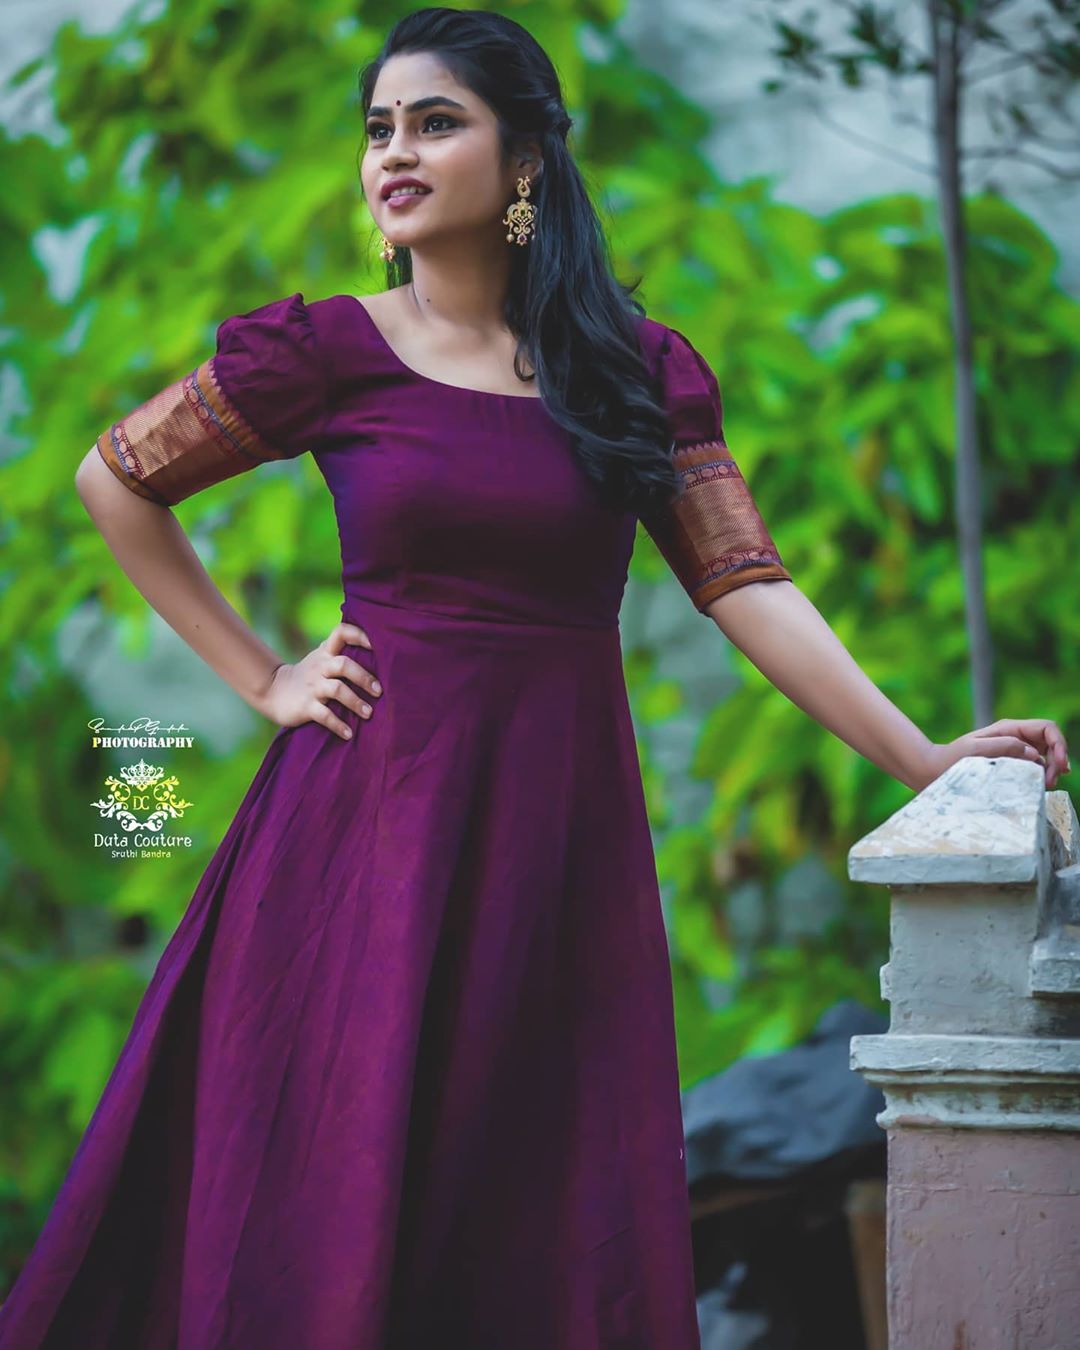 Sowmya Dhanavath photoshoot stills in Duta Couture